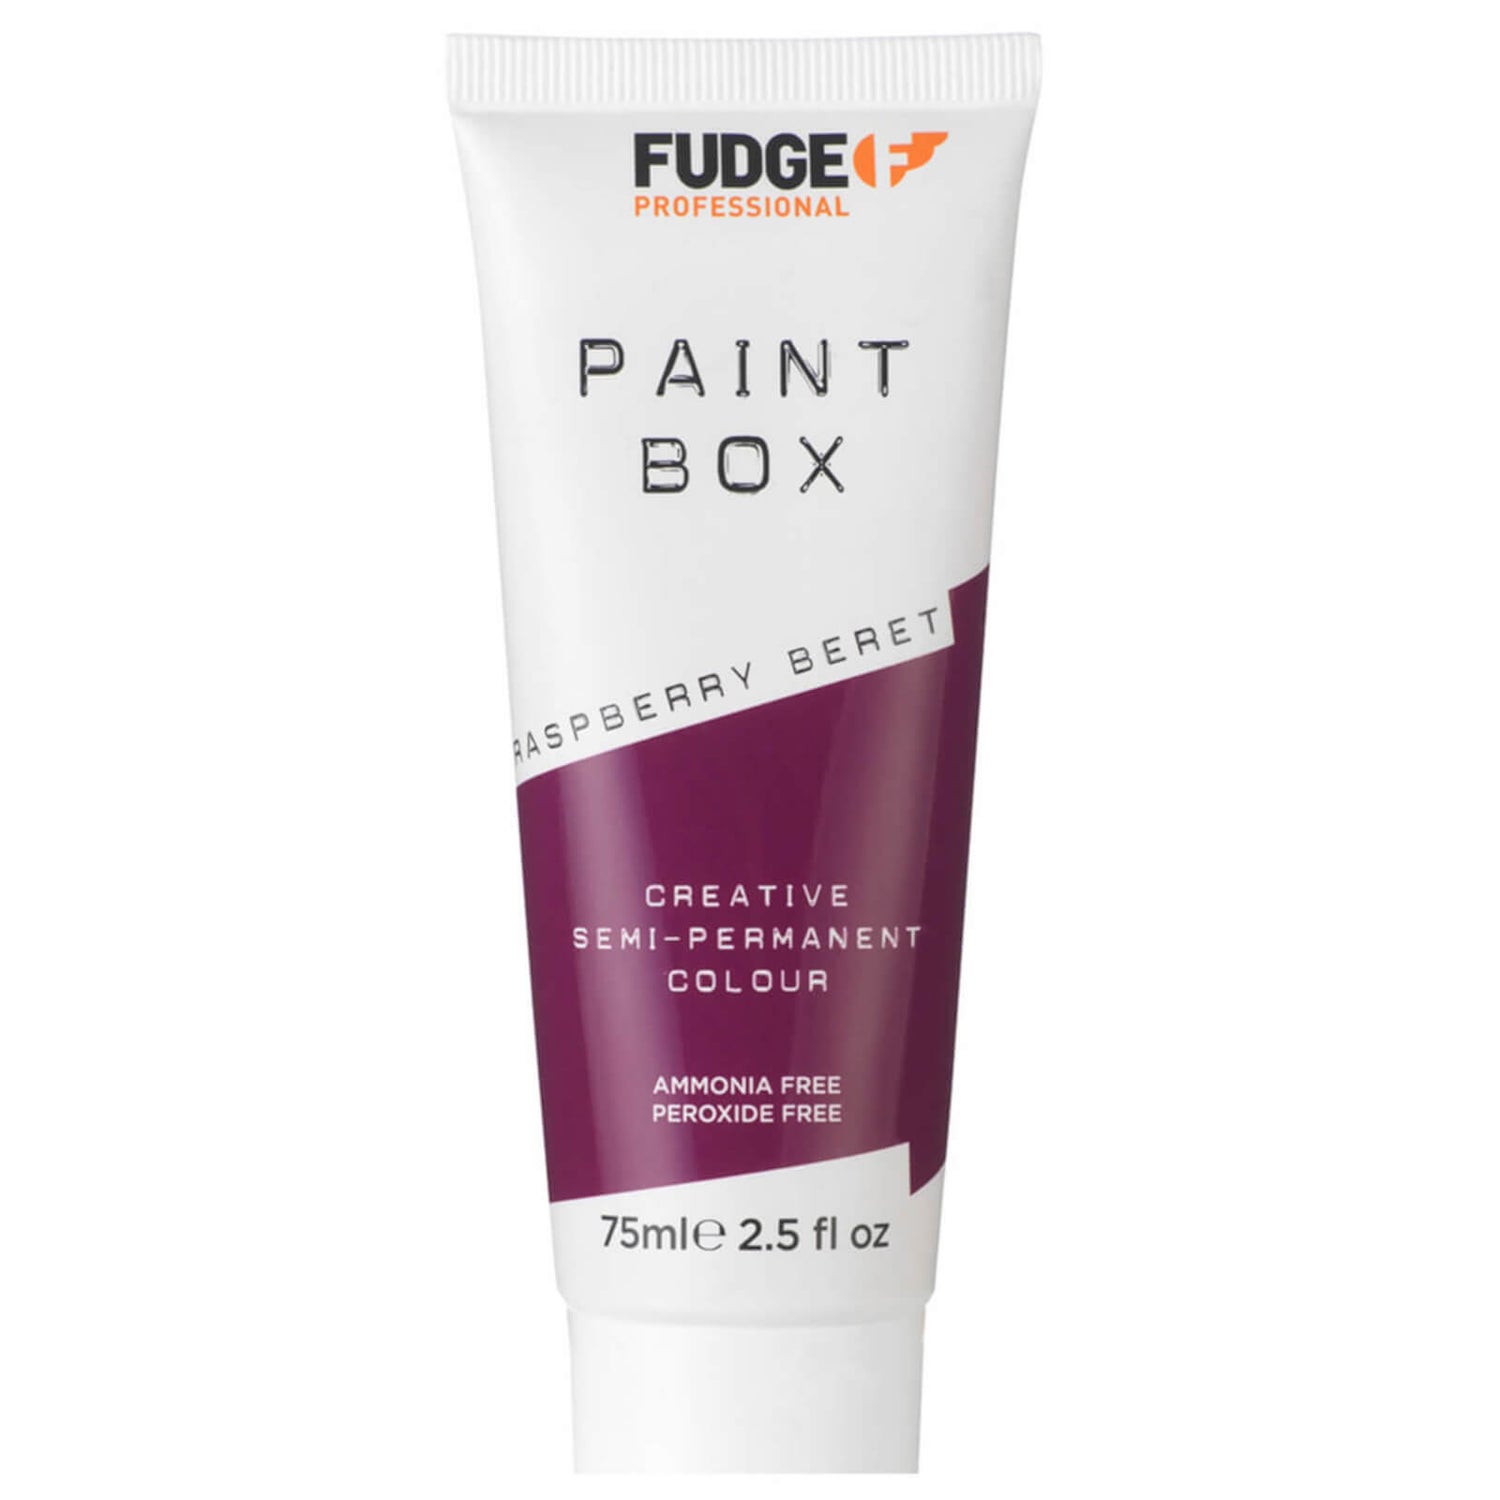 Tinte Paintbox Raspberry Beret de Fudge 75 ml